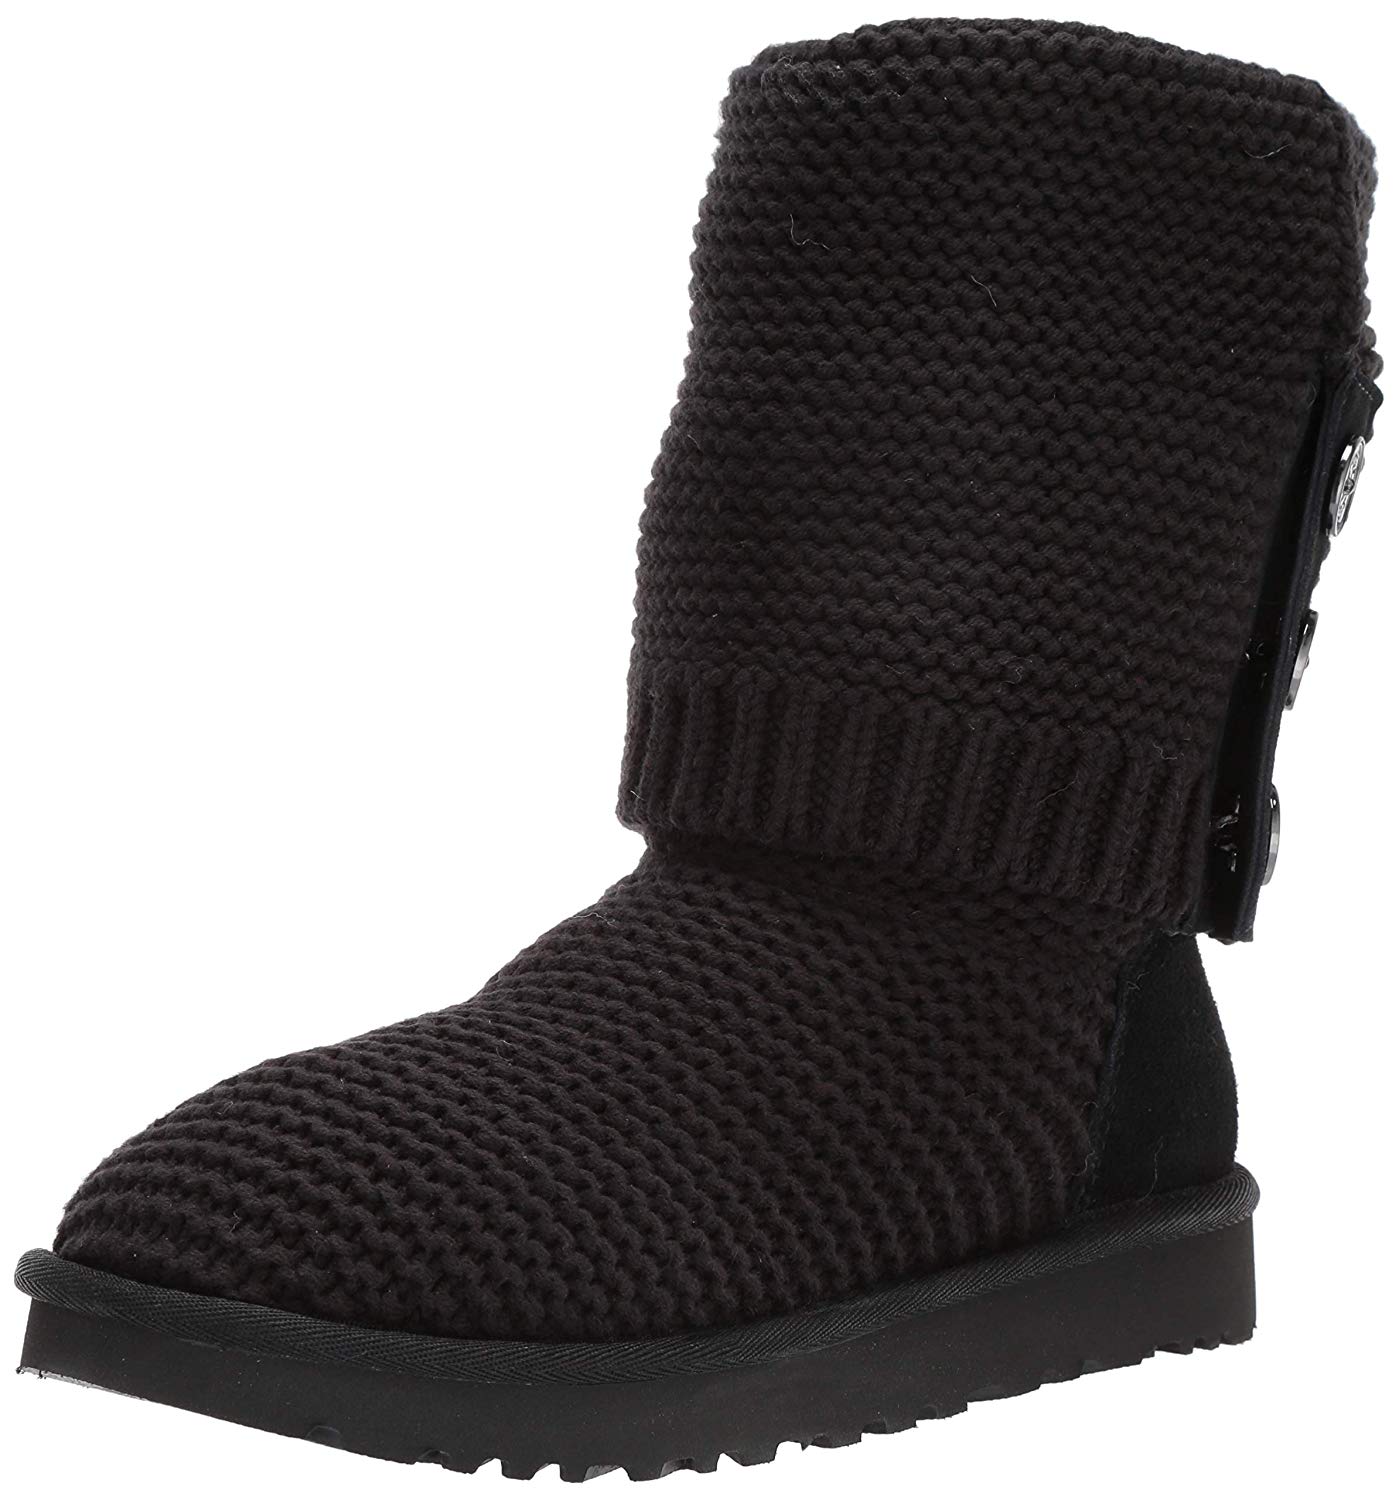 UGG Women's W PURL Cardy Knit Fashion Boot, Black, Size 7.0 Dt9P | eBay